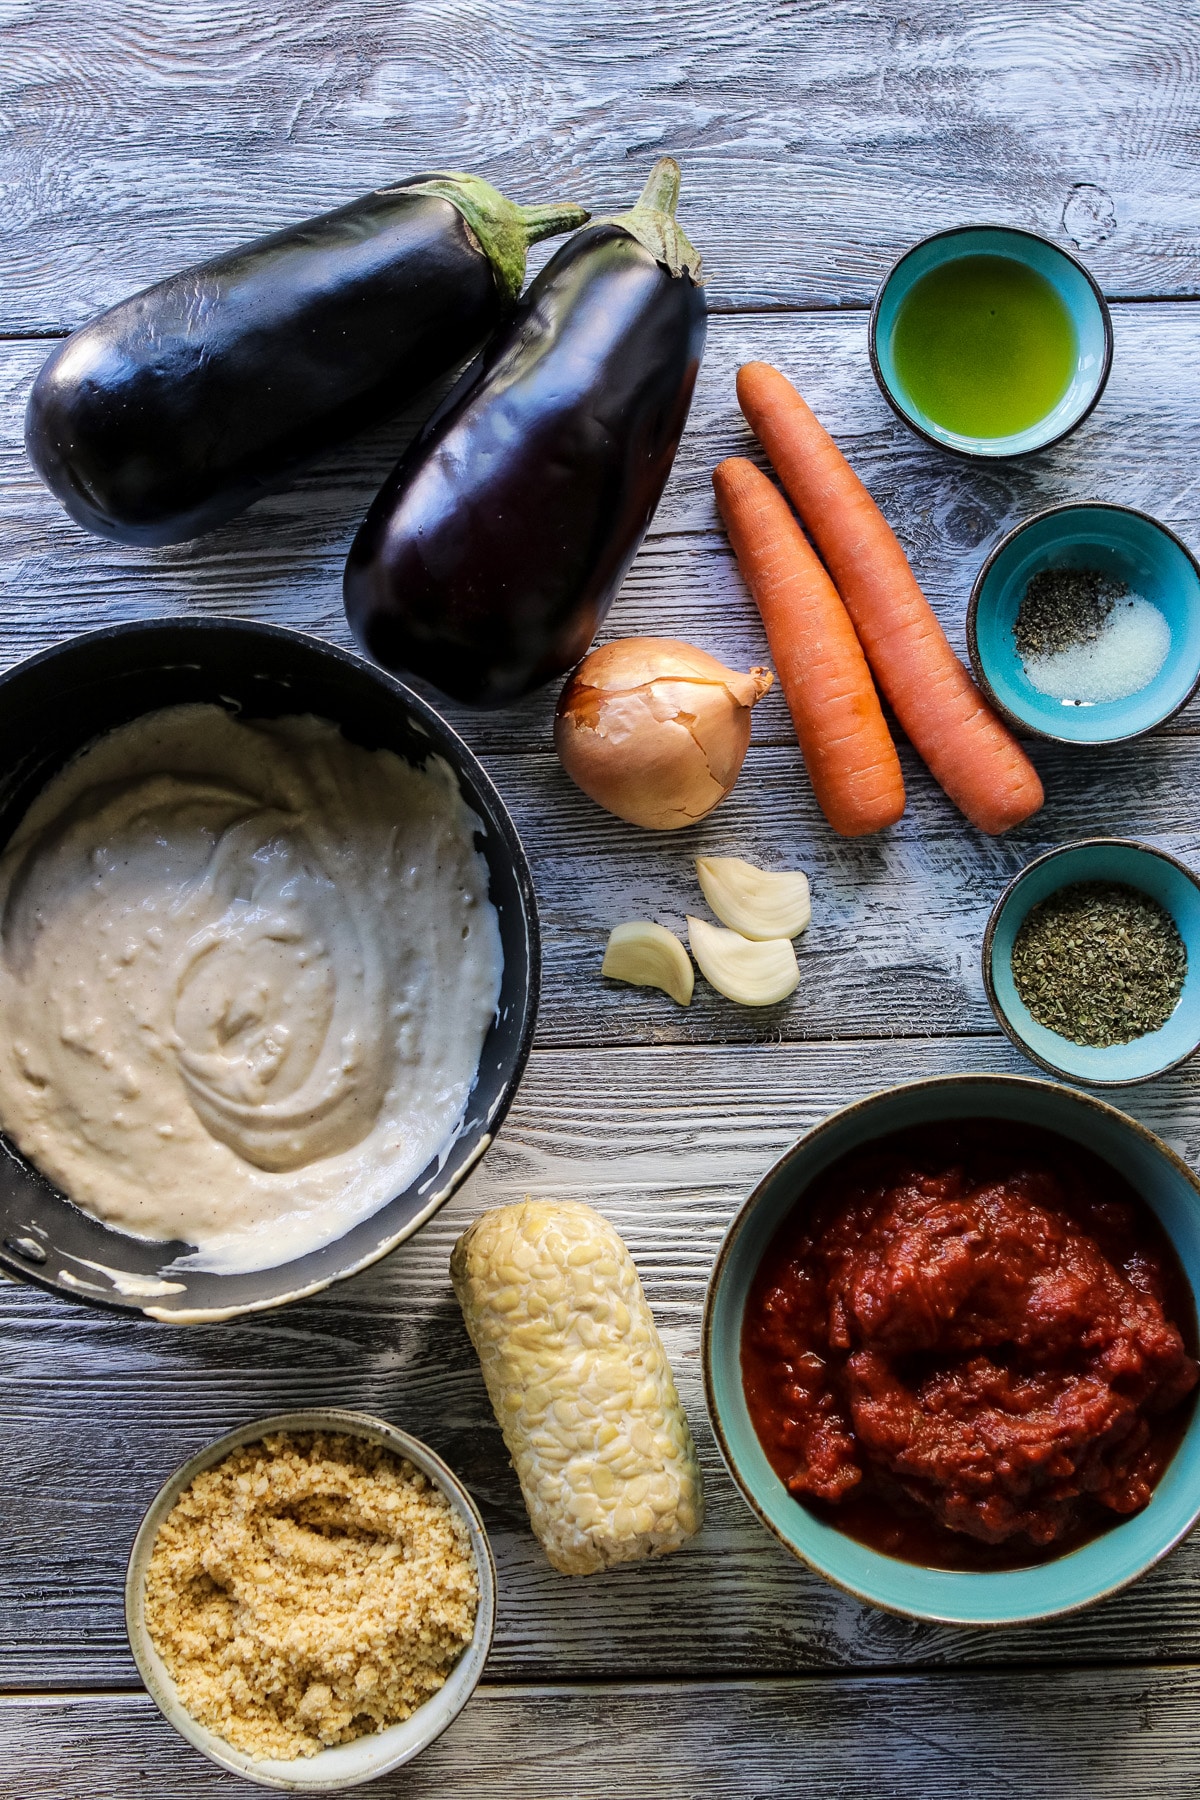 Ingredients for Vegetarian Eggplant Lasagna.